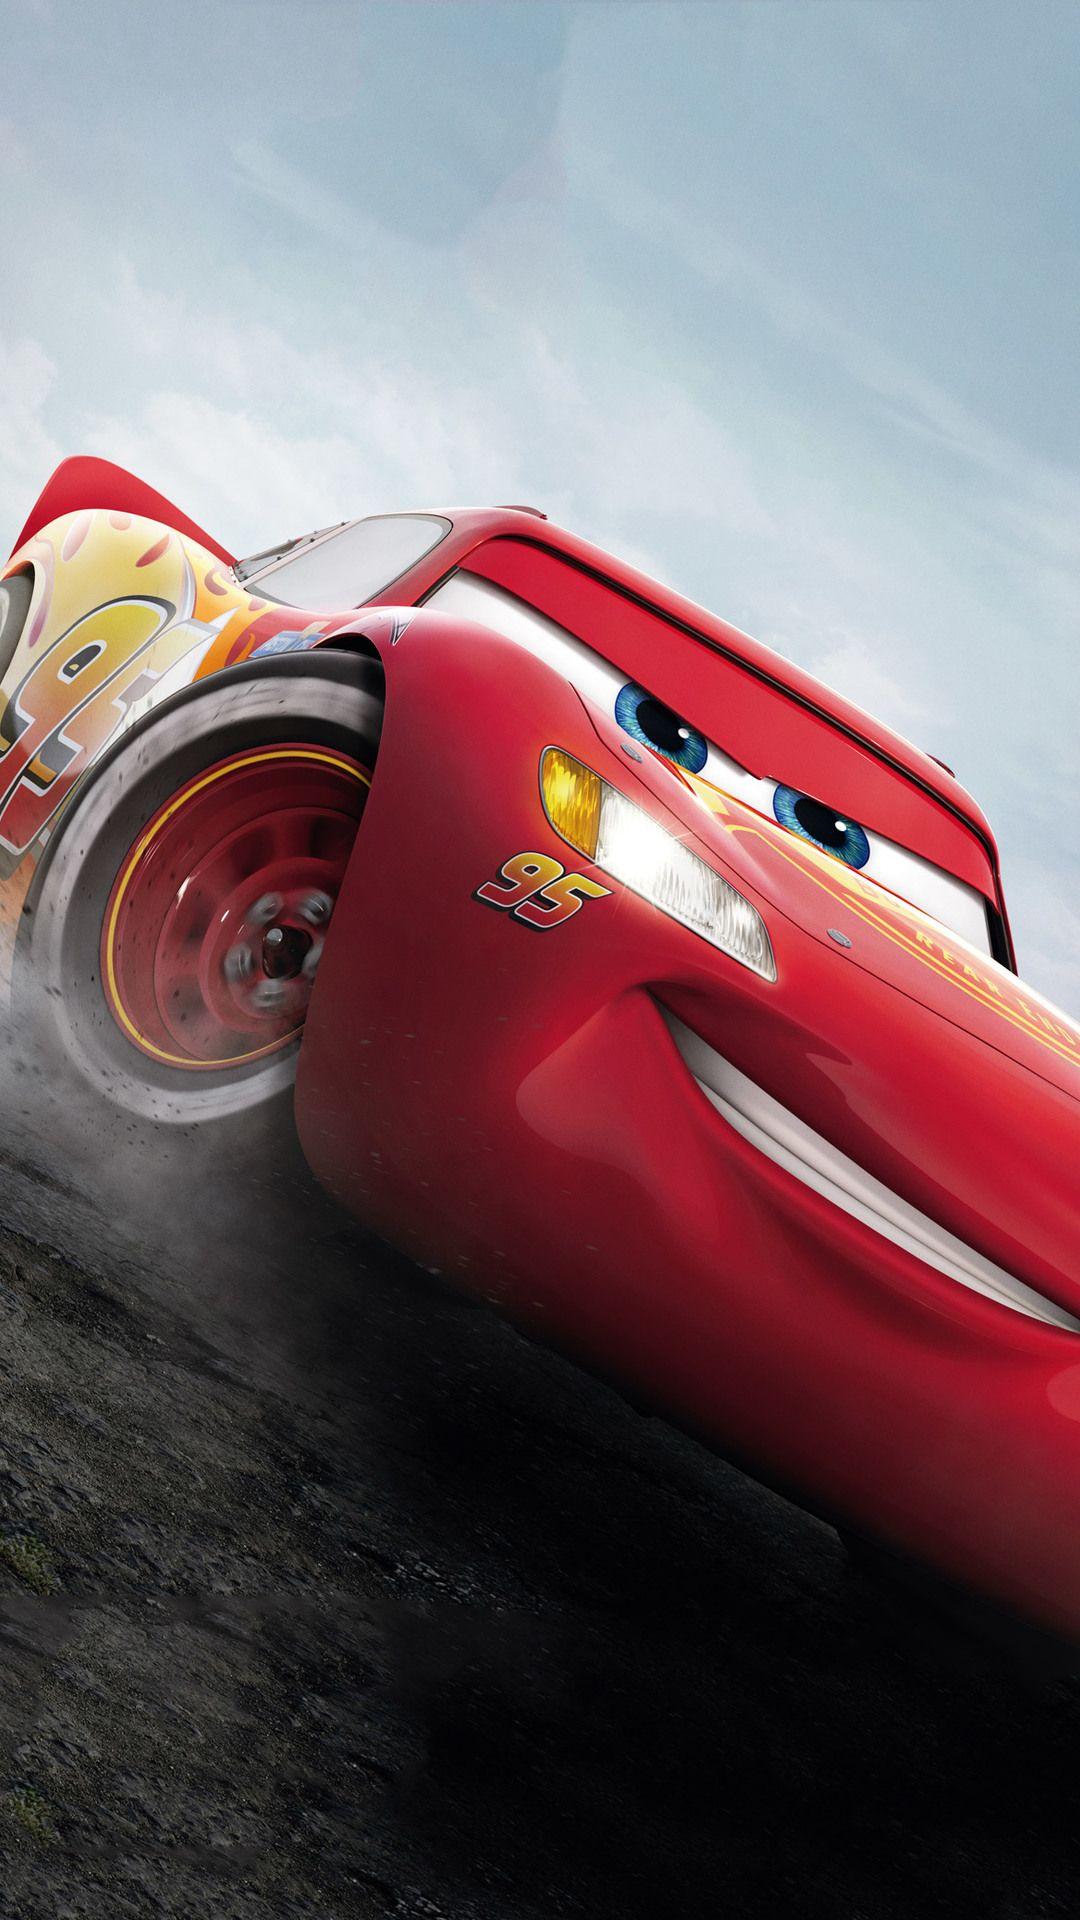 Pixar Cars iPhone Wallpapers Top Những Hình Ảnh Đẹp